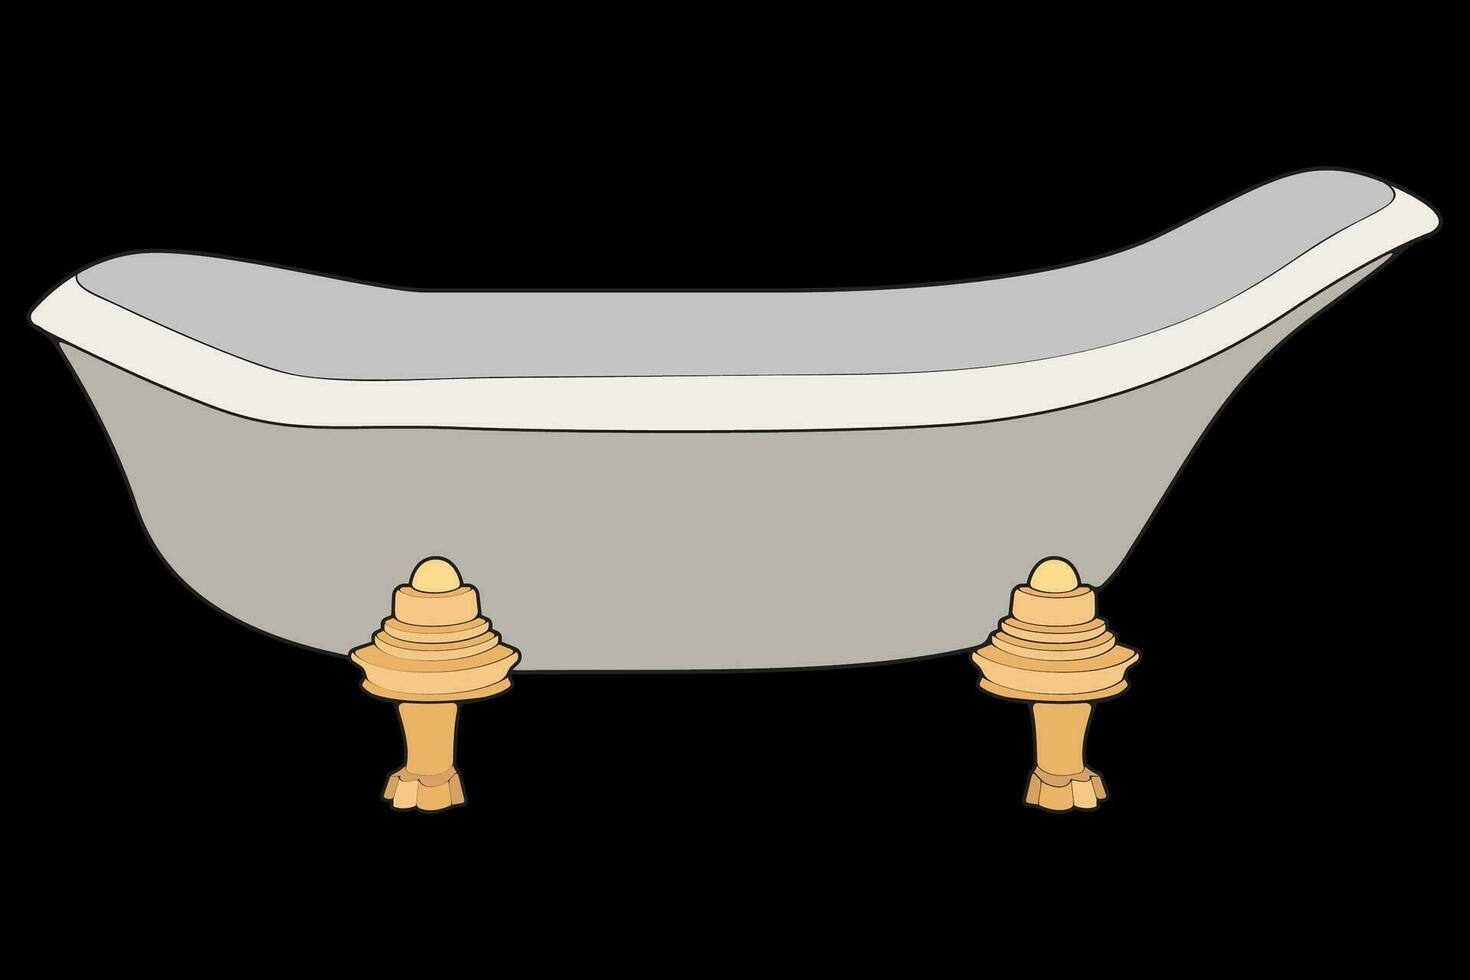 Bath tub fullcolor vector illustration. Vector isolated on black background bath tub.